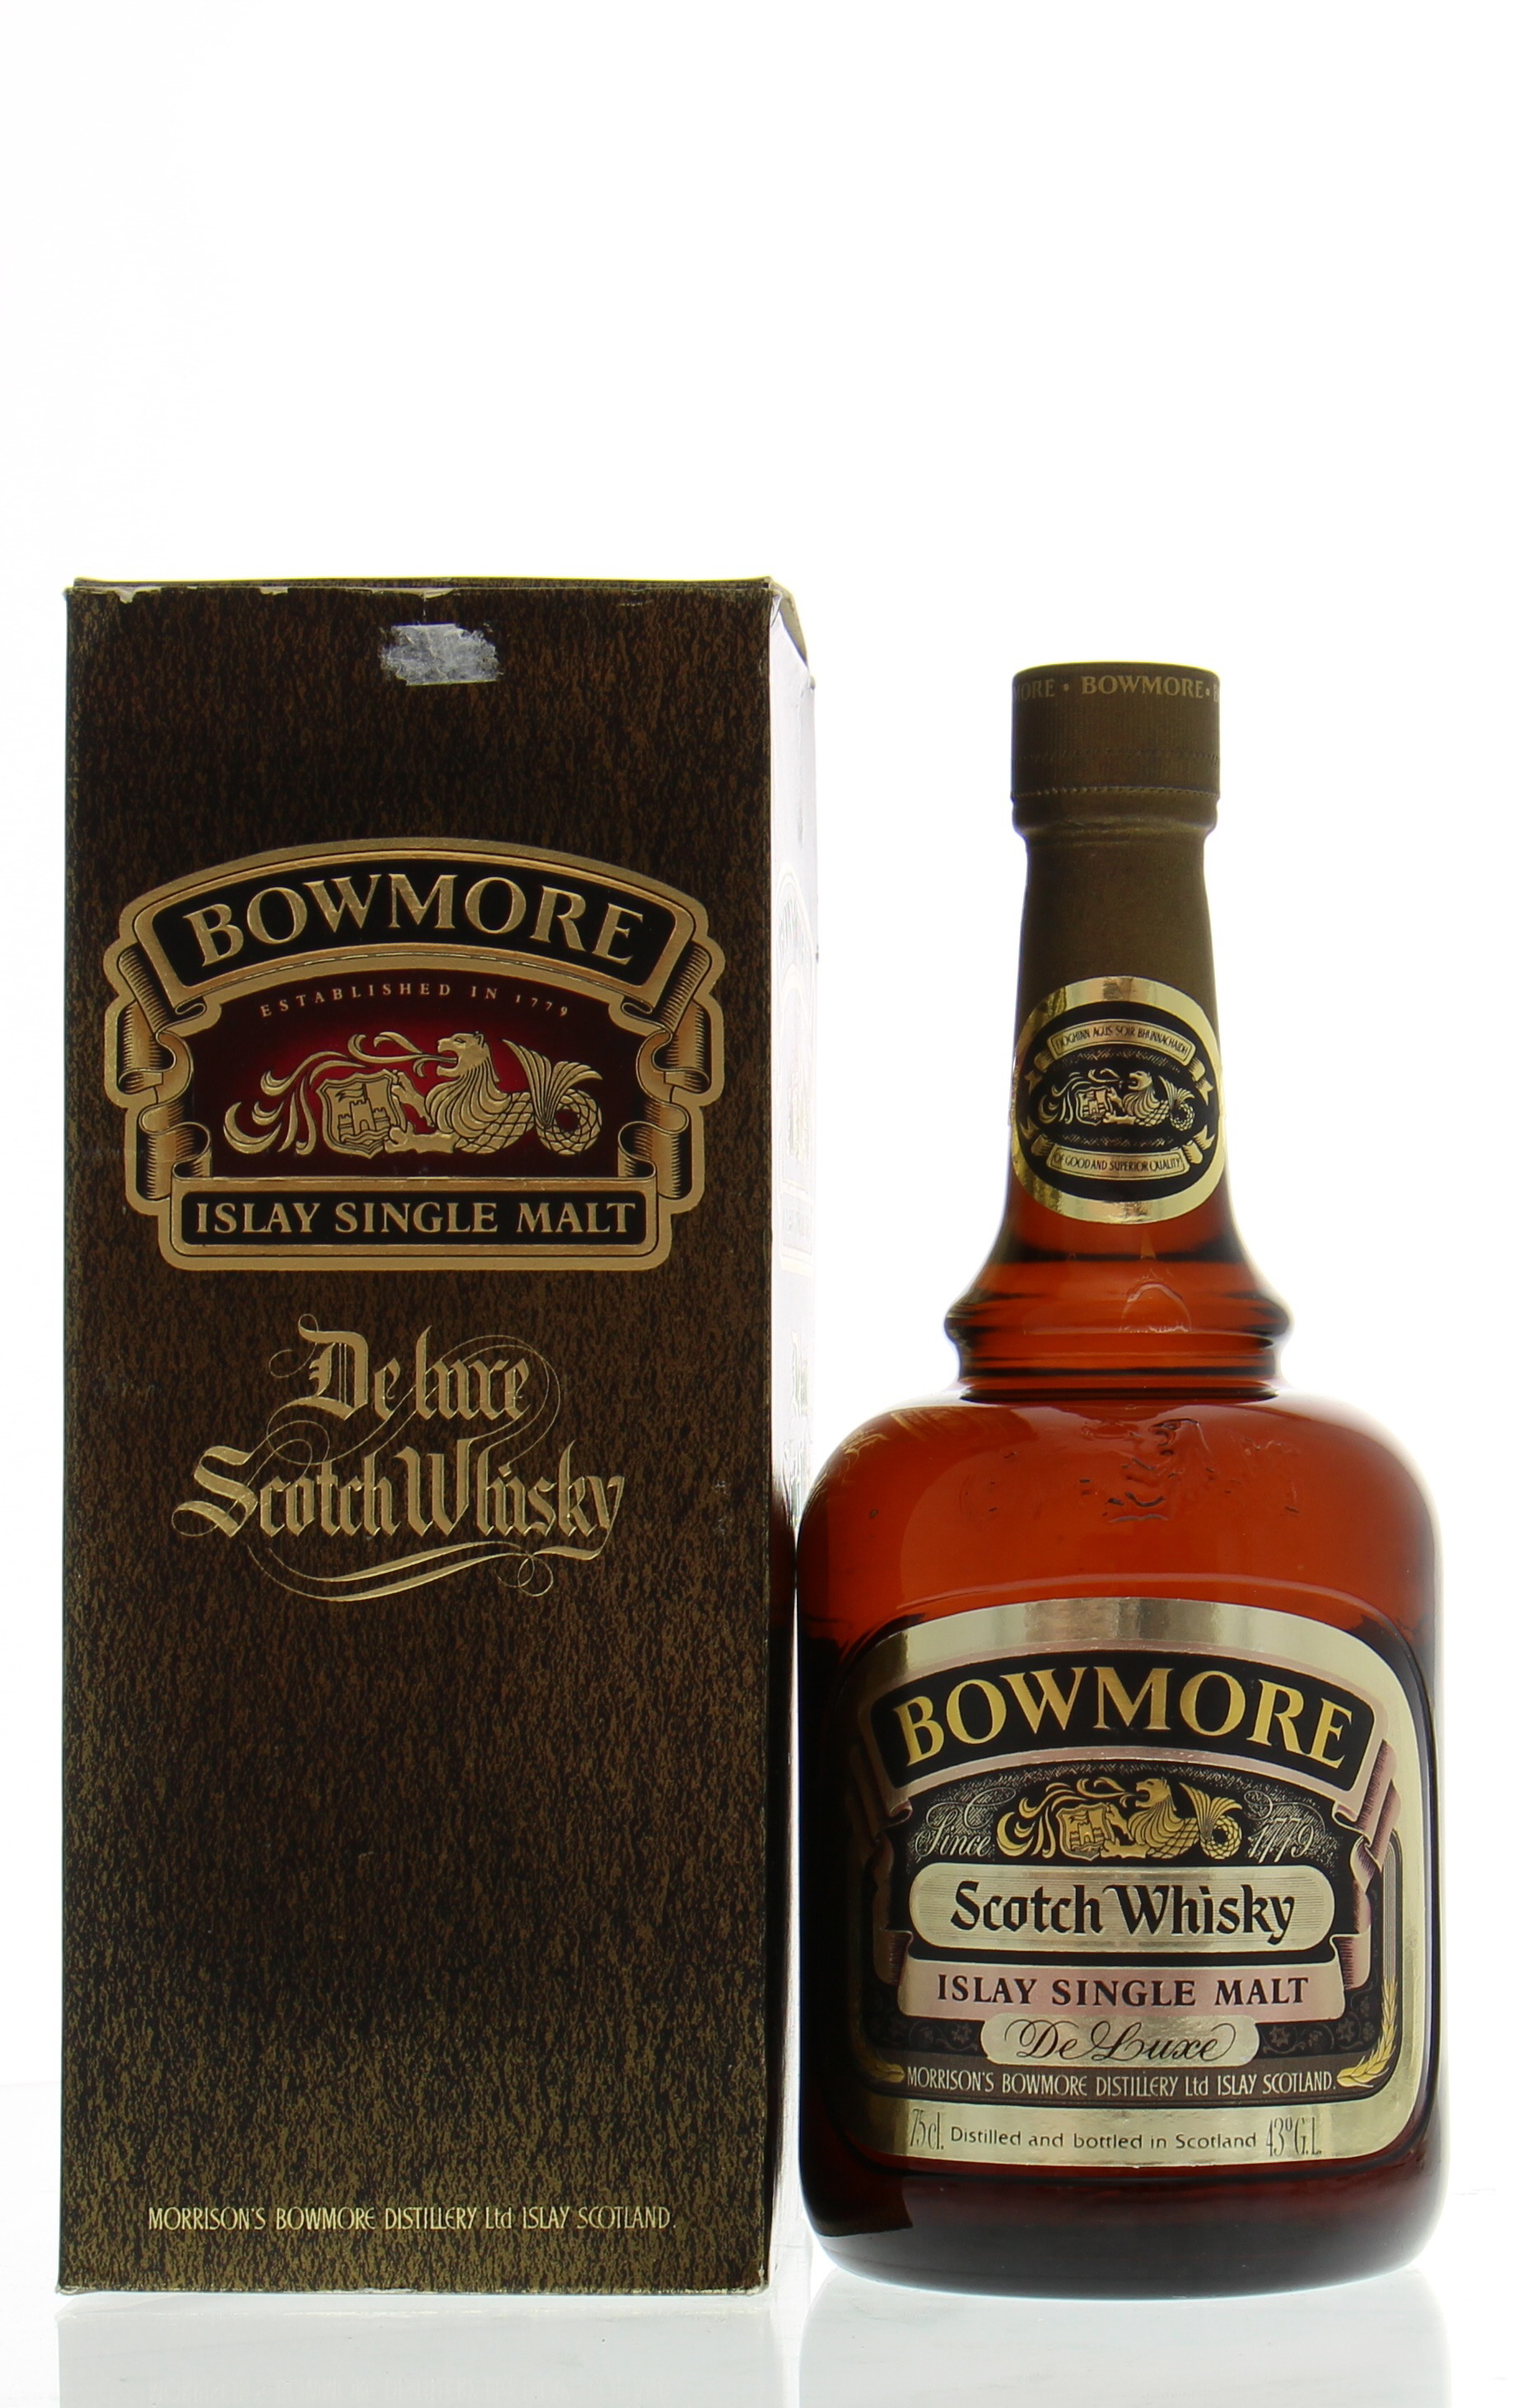 Bowmore - Bowmore De Luxe (Brown dumpy with cork stopper) 1980's 43% NV